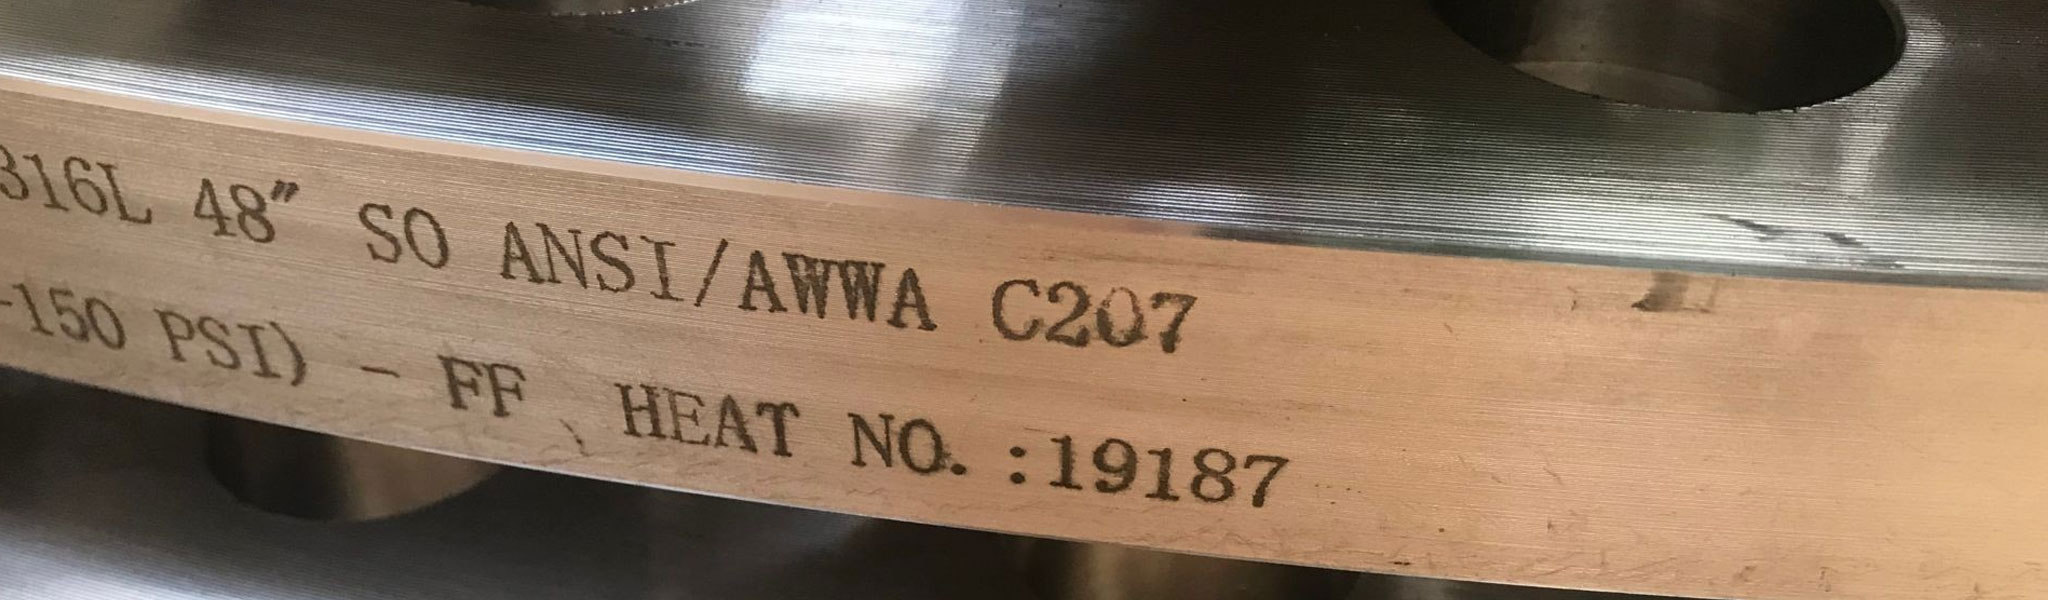 Awwa c207钢管法兰